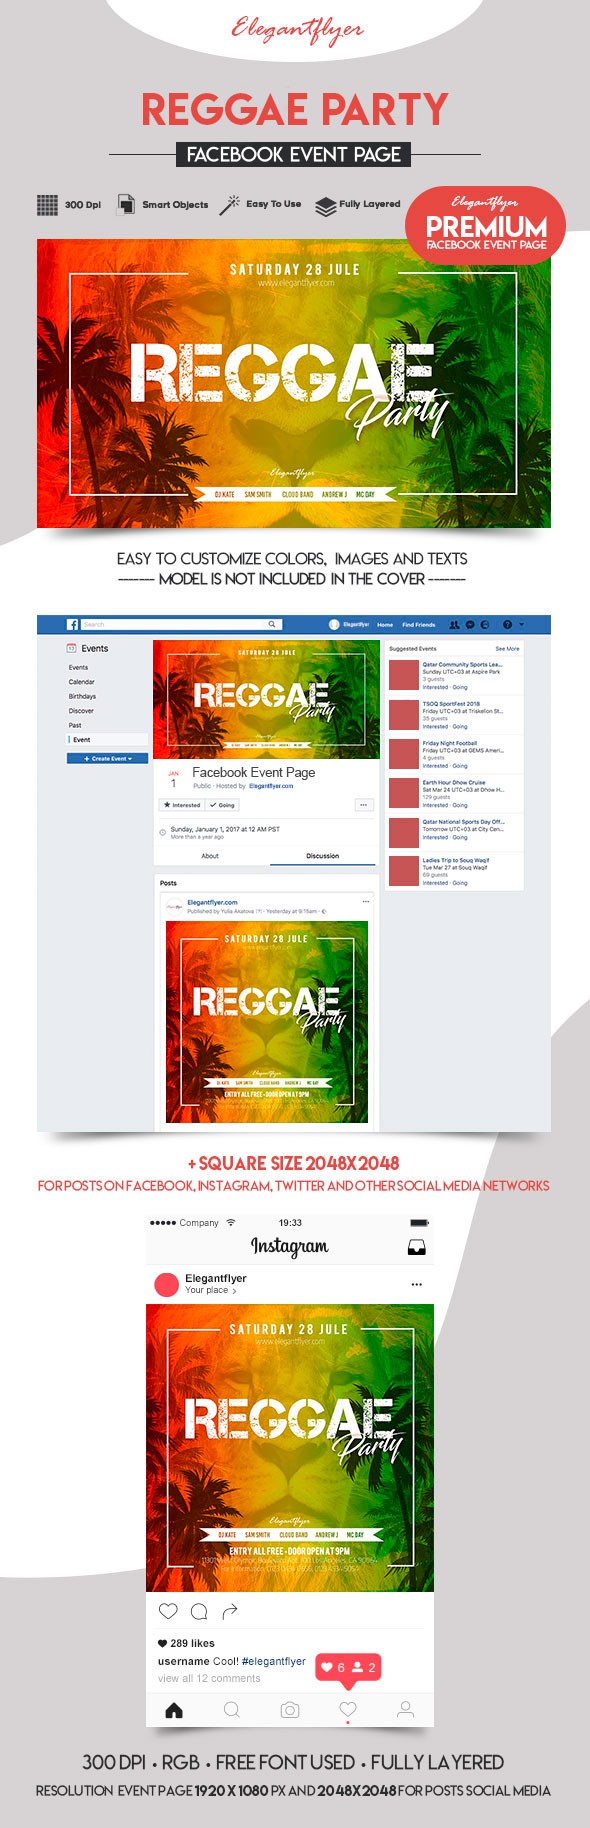 Festa de Reggae no Facebook by ElegantFlyer